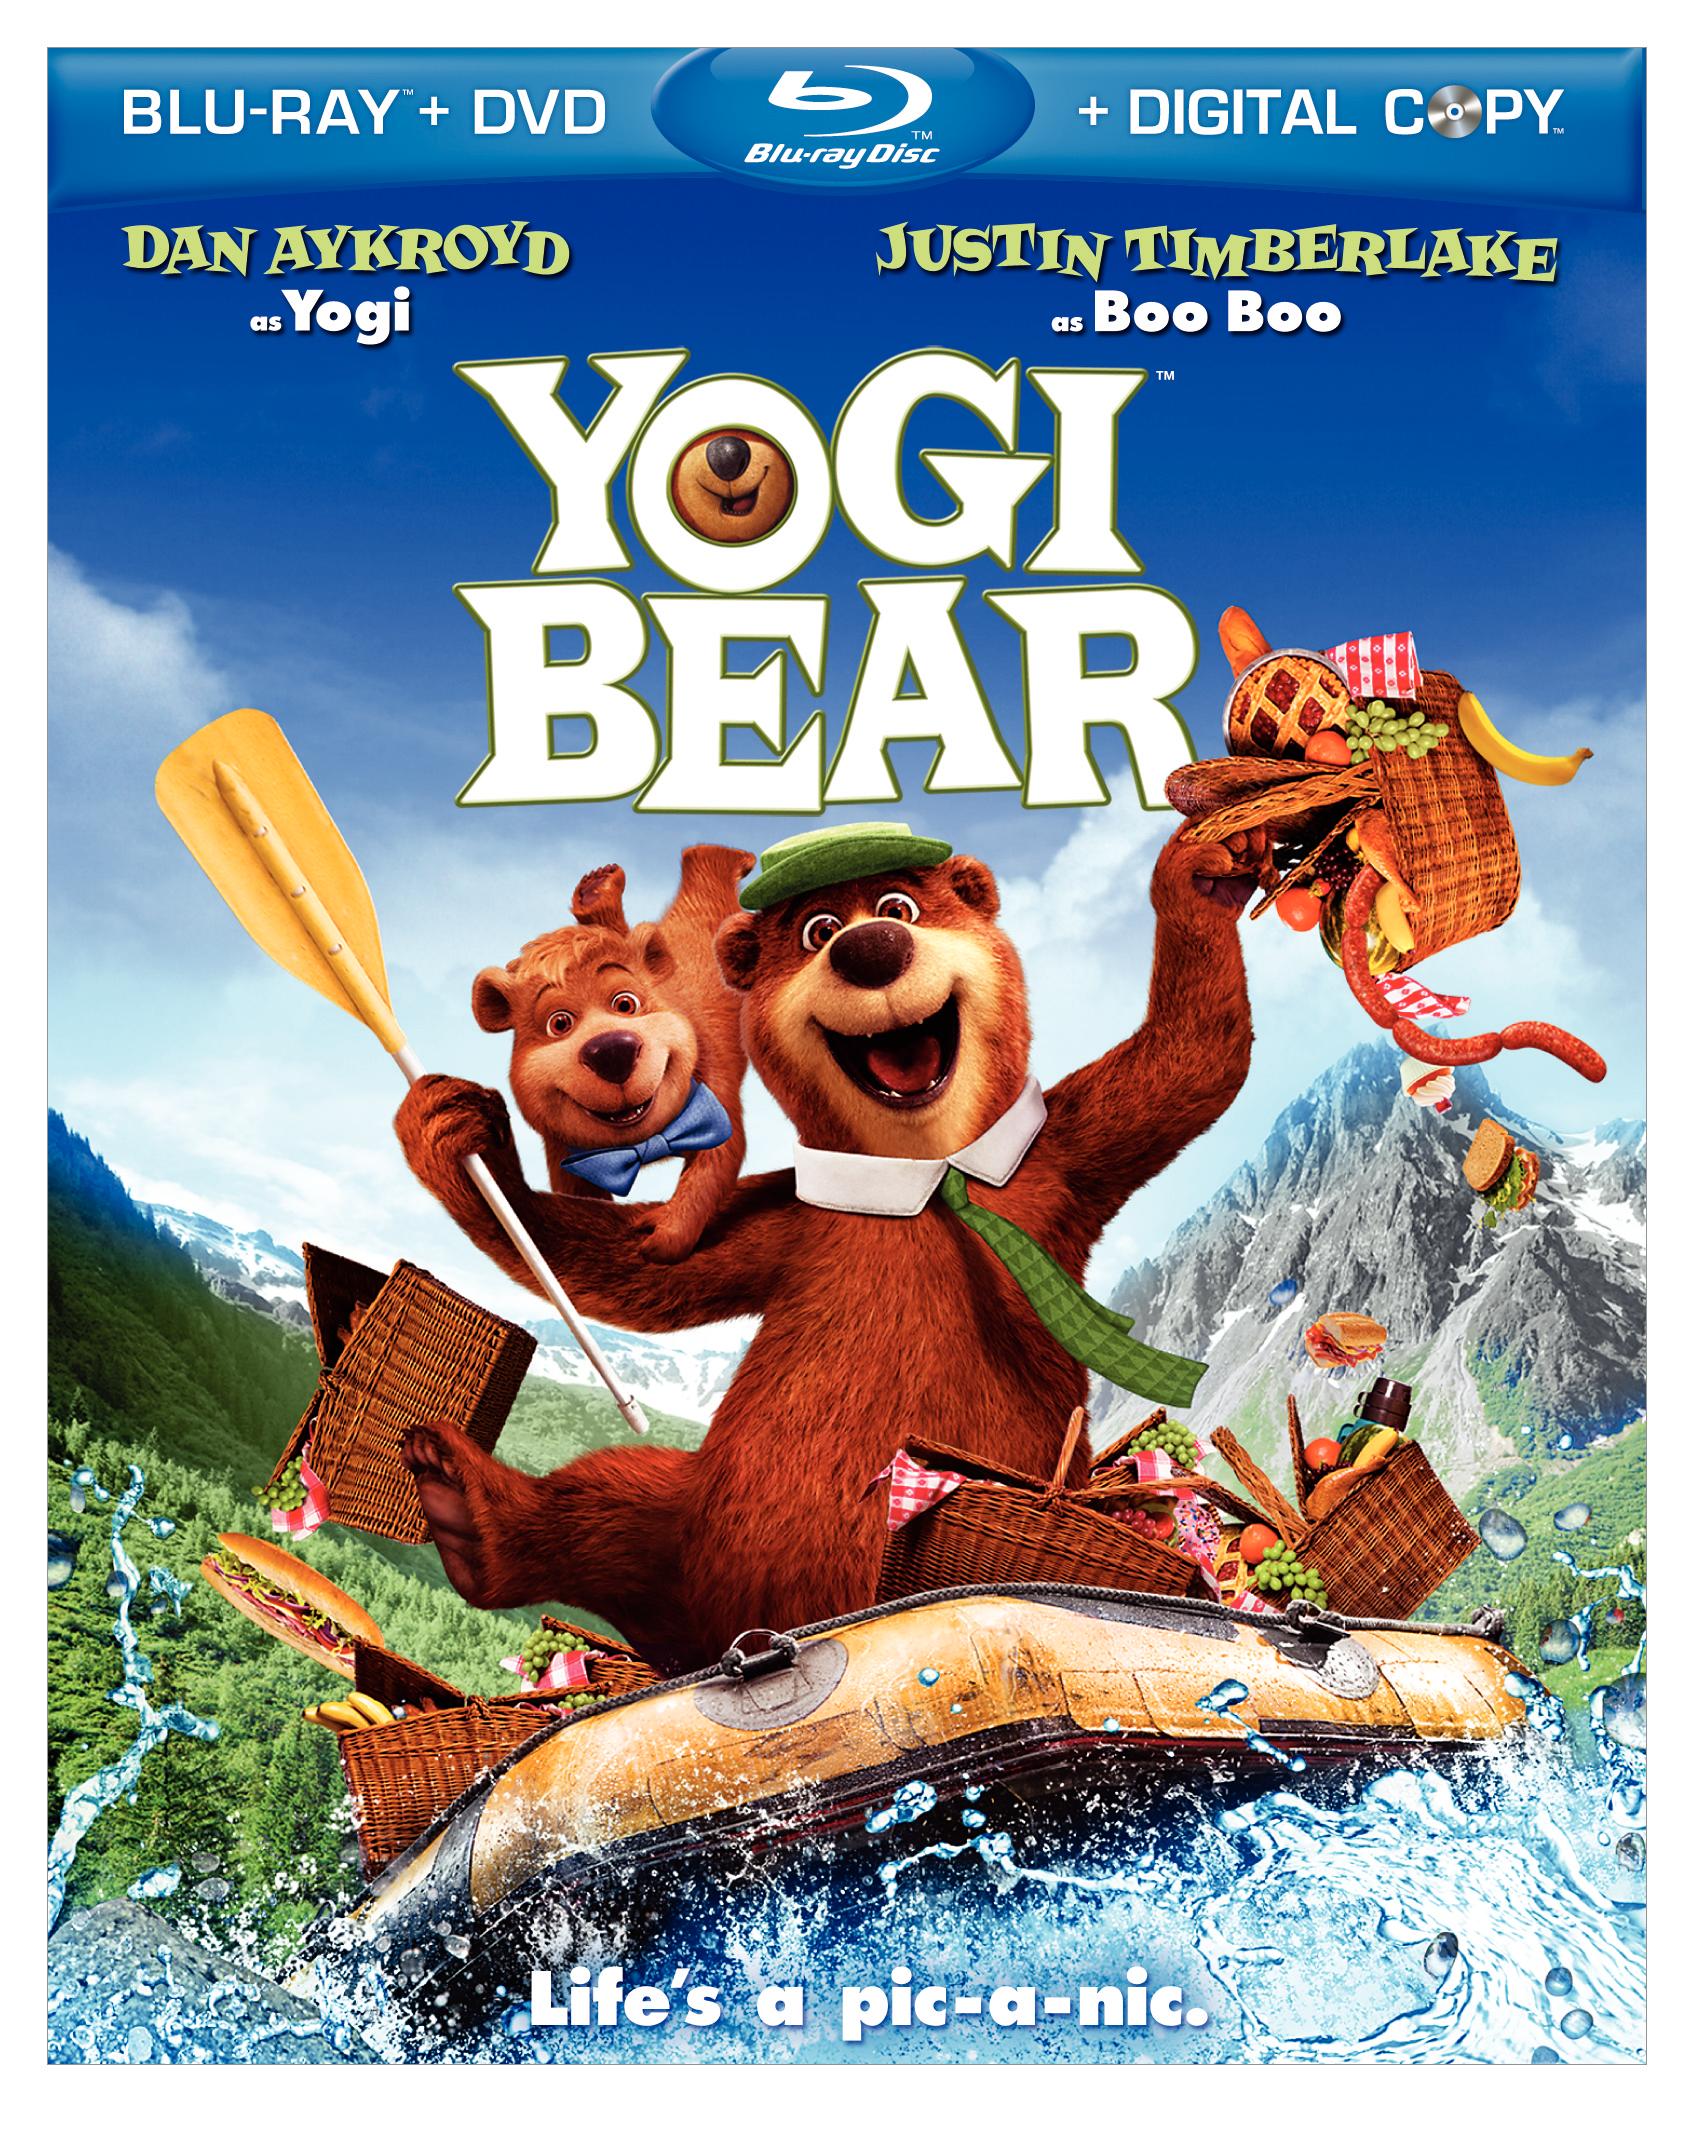 Yogi Bear on DVD/Blu-ray 3/22/11